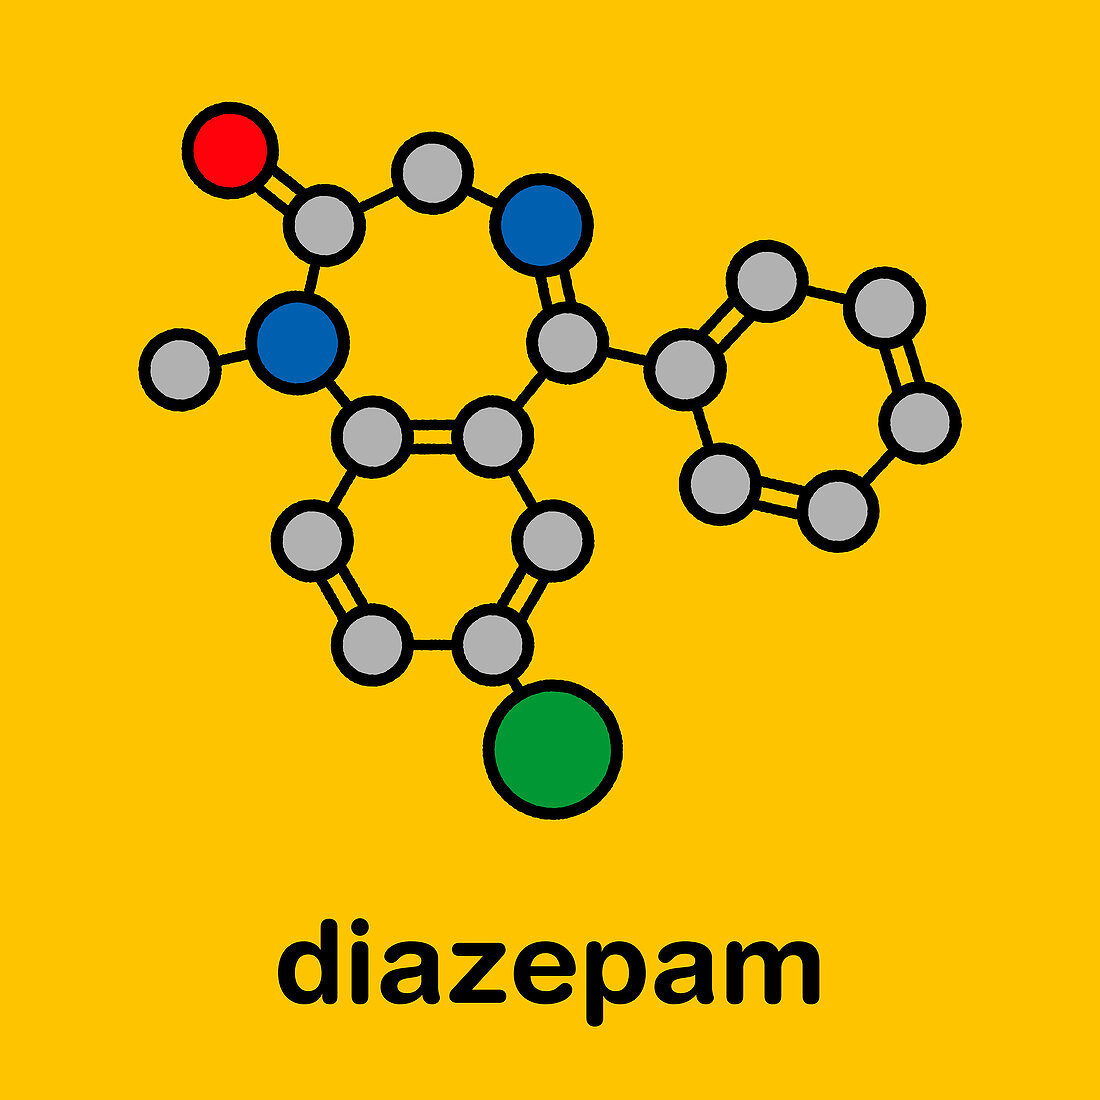 Diazepam sedative and hypnotic drug, molecular model